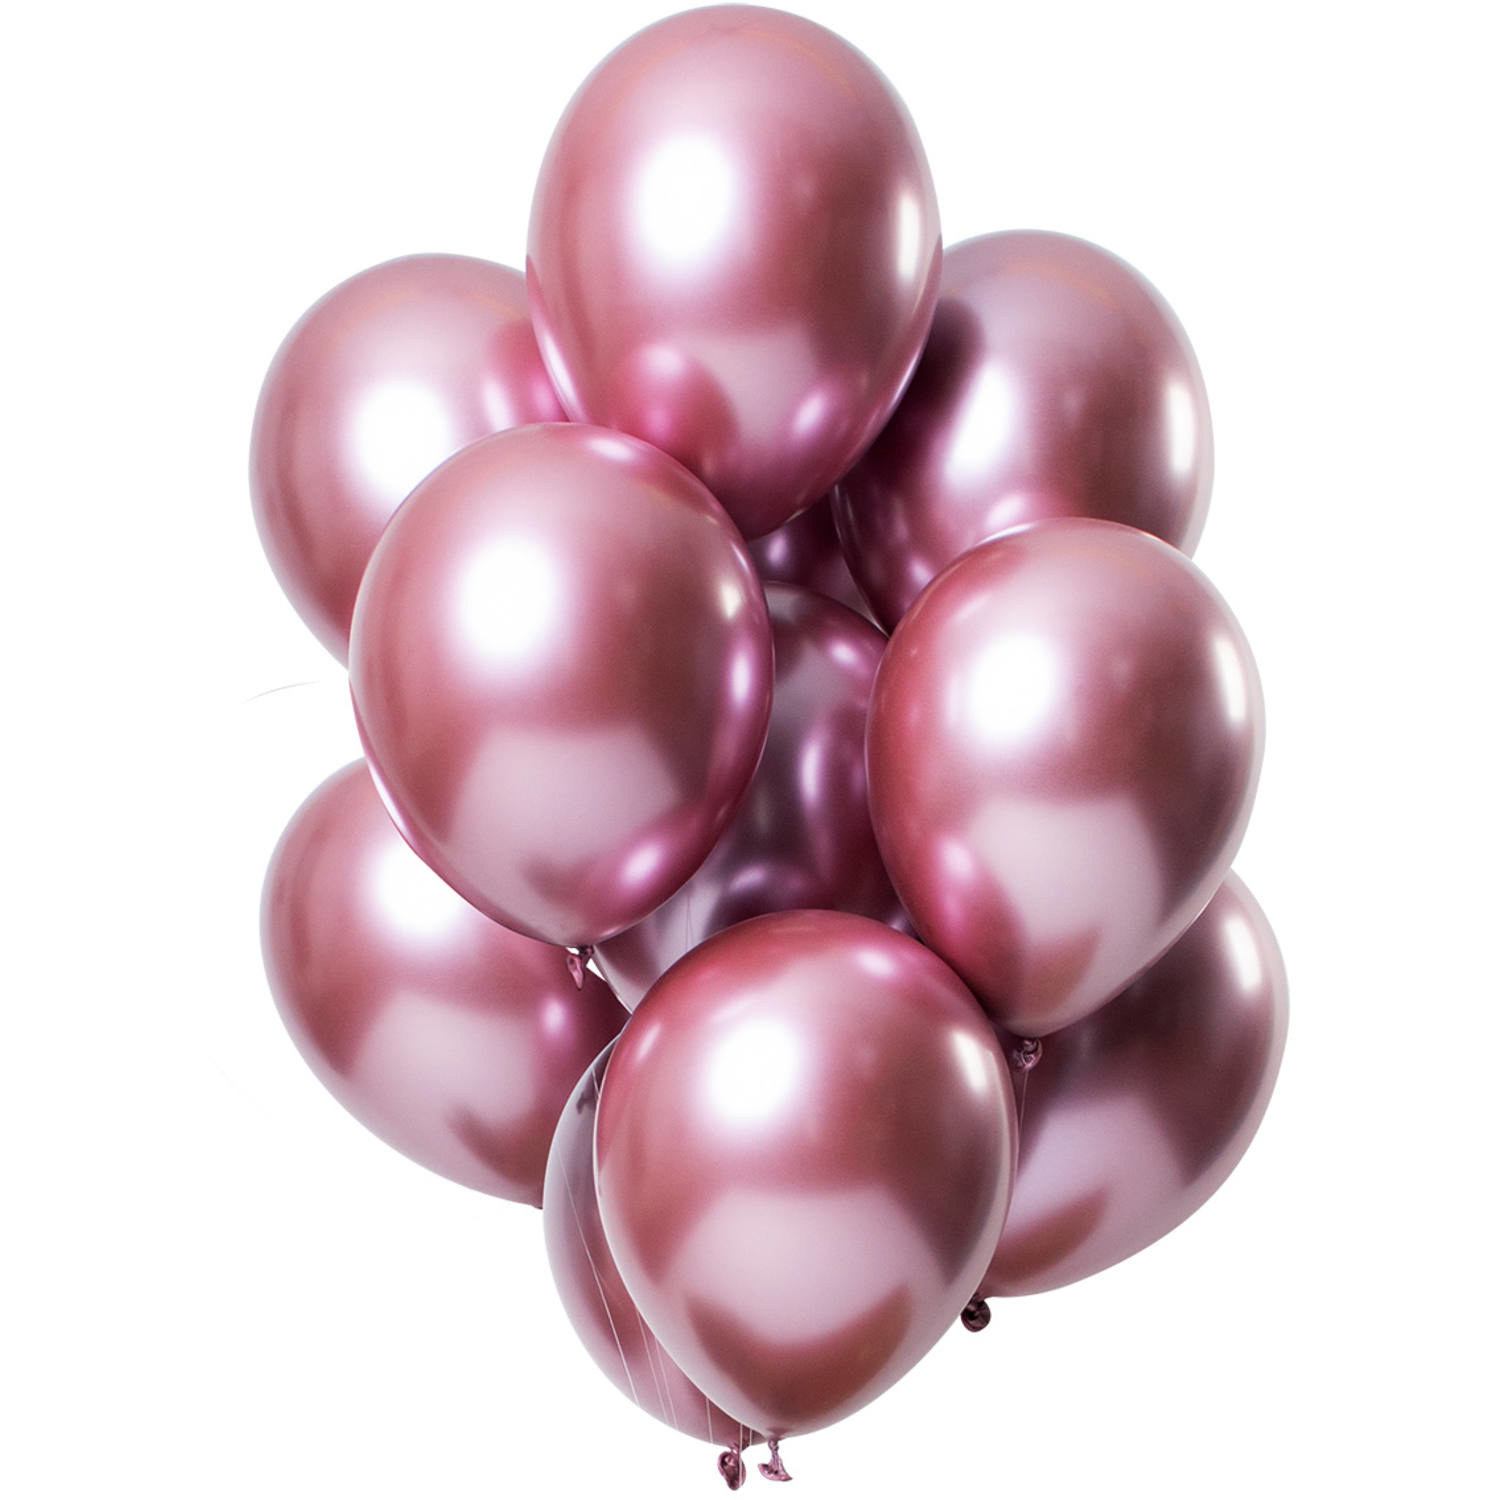 landen Doe voorzichtig Agressief Ballonnen Mirror Chrome Roze 33cm kopen? - Feestartikelen Specialist